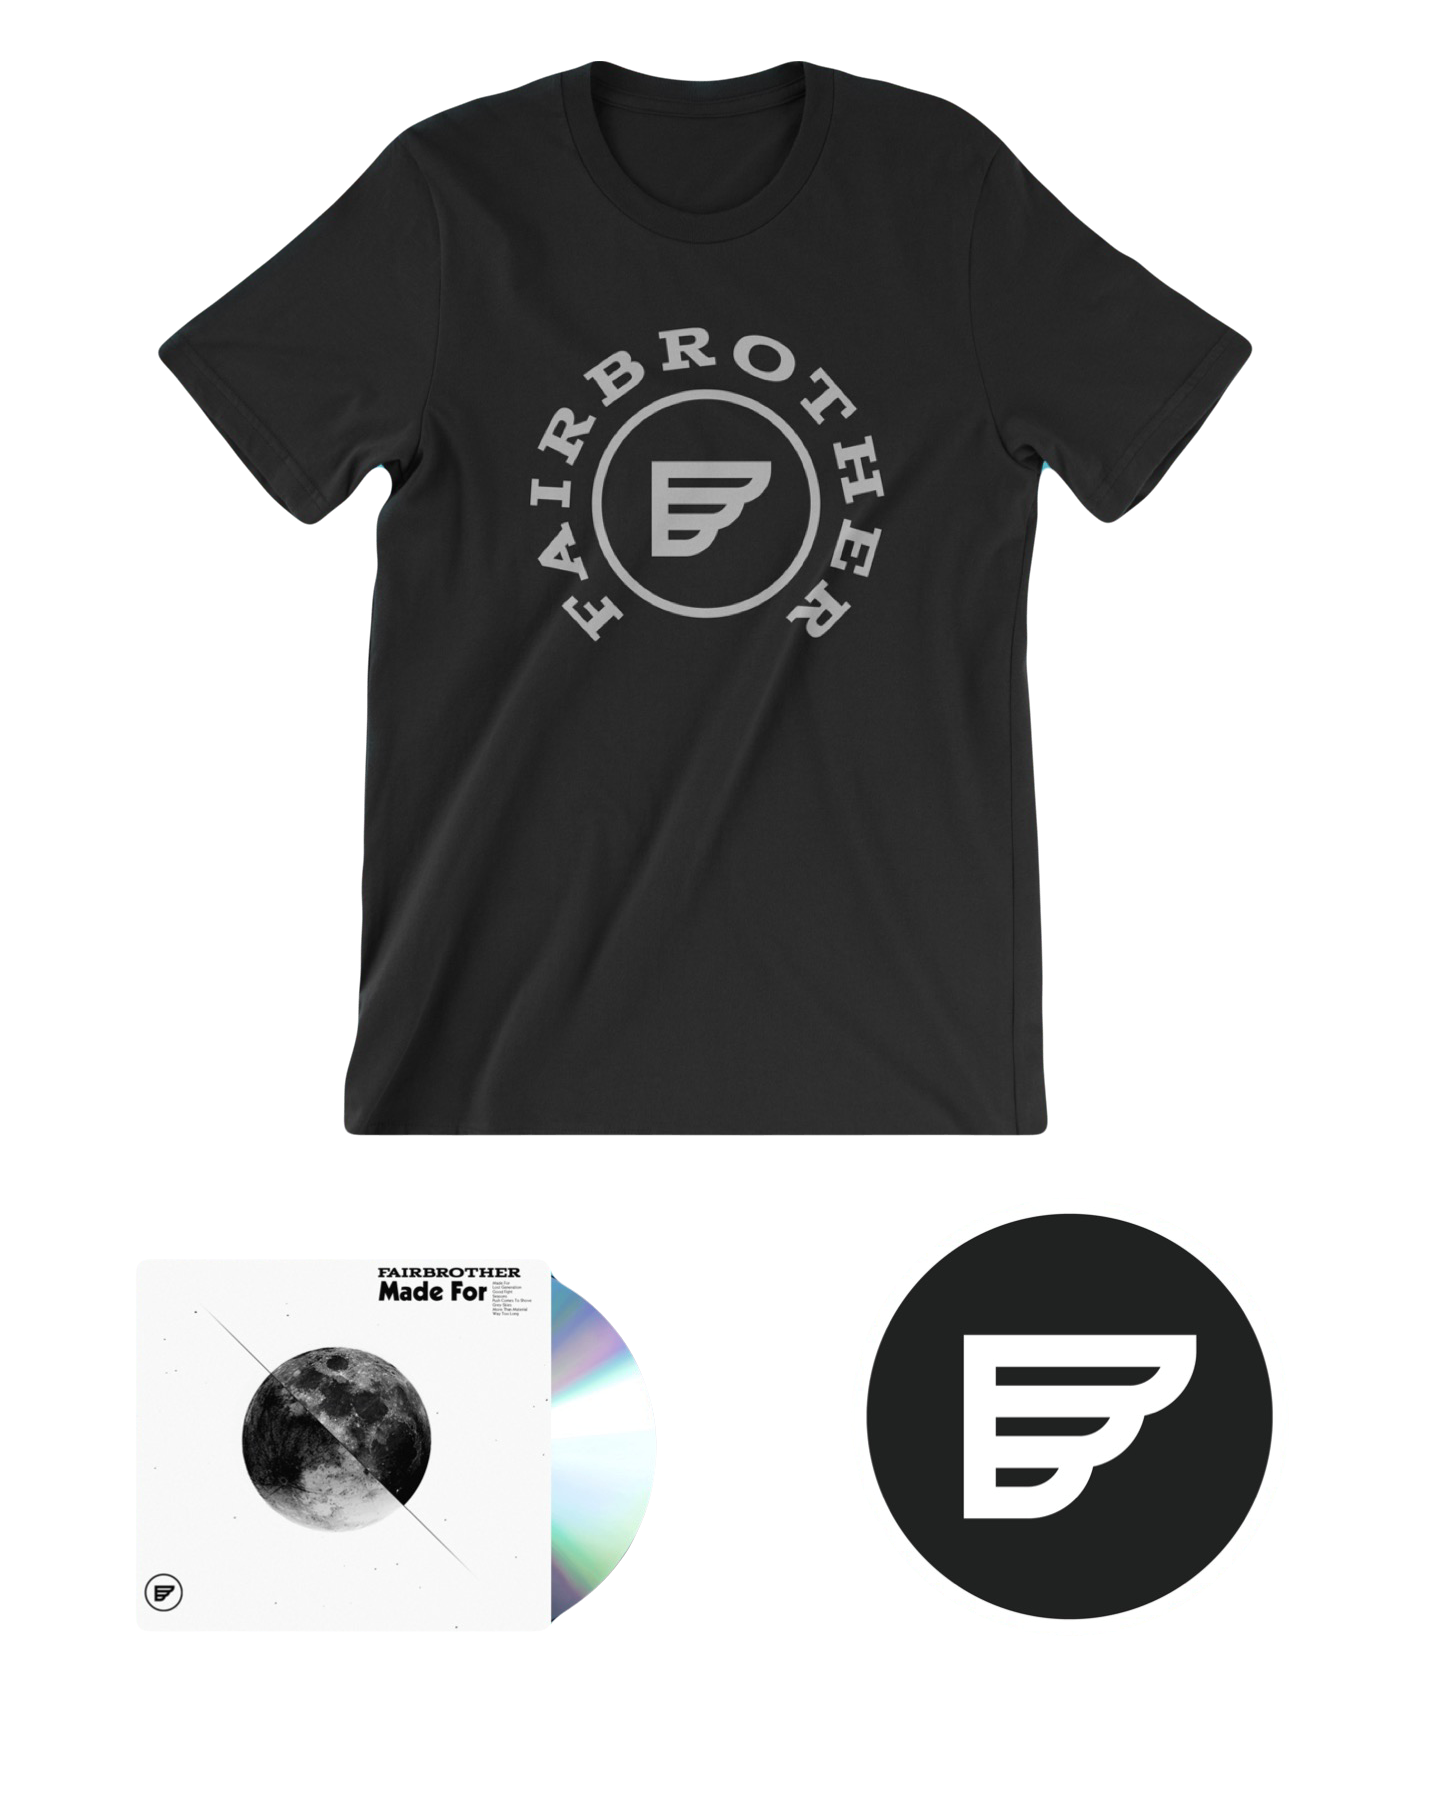 Fairbrother (Bundle) Logo tee+Album+Sticker (15% off)